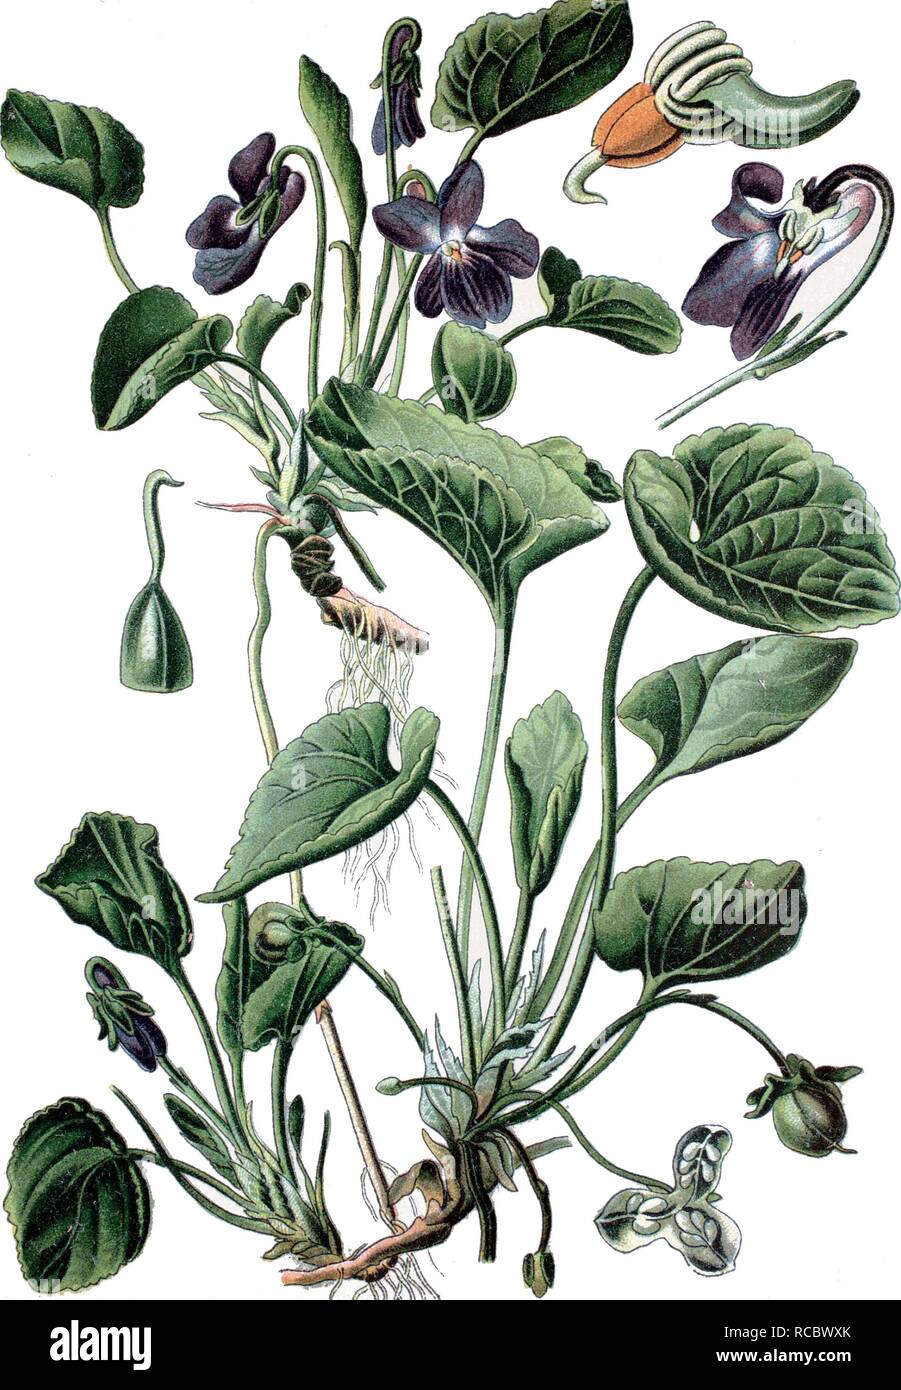 Violette odorante (Viola odorata), une plante médicinale,  chromolithographie historique, ca. 1870 Photo Stock - Alamy